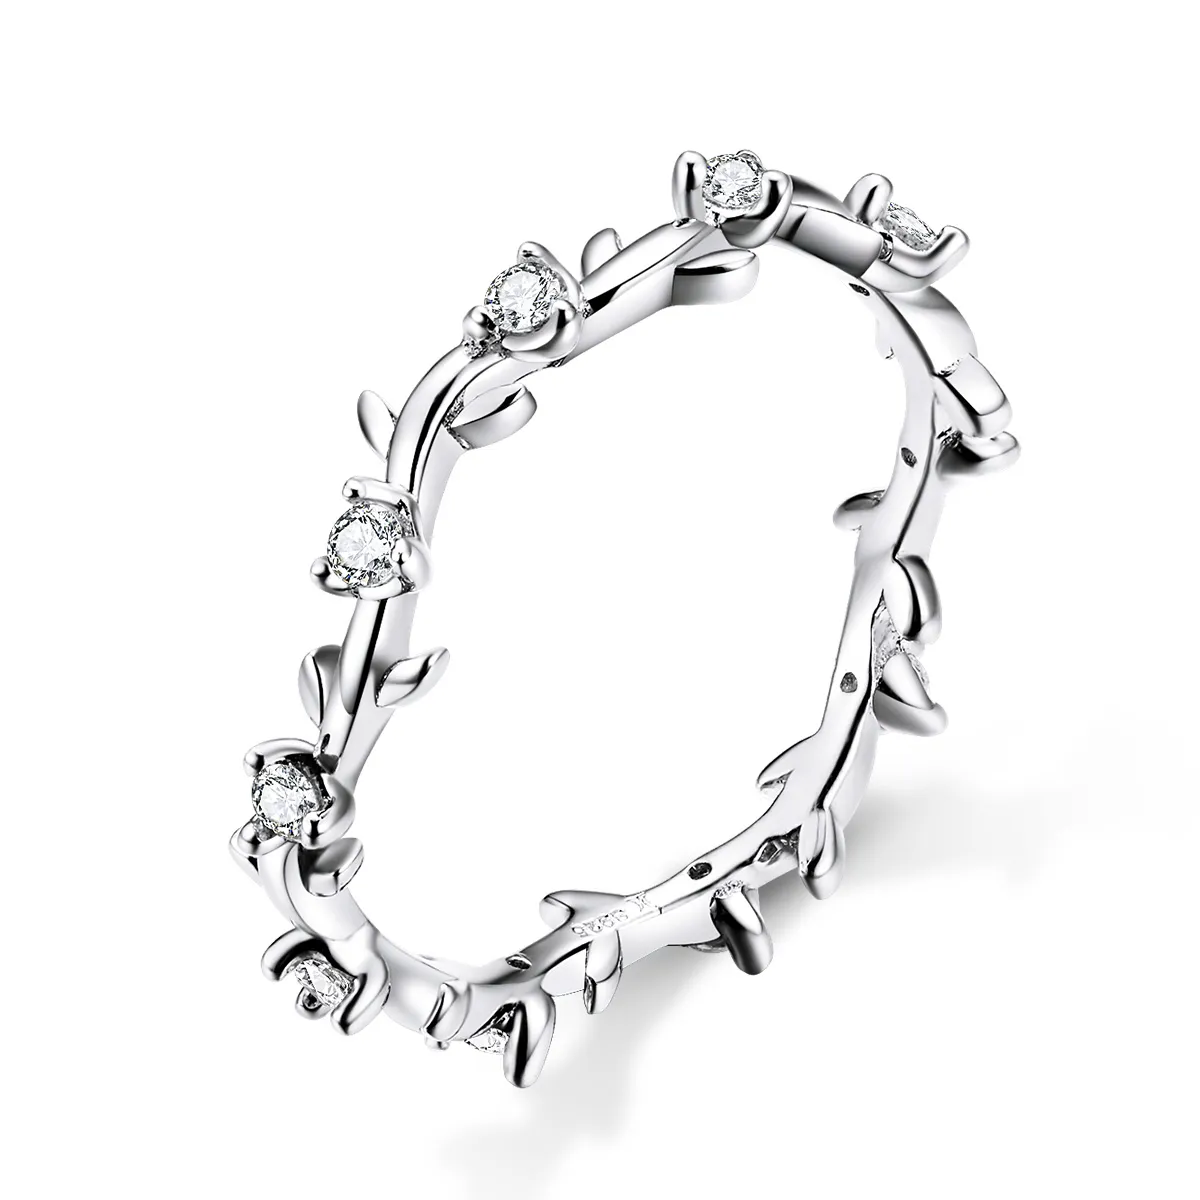 Pandora Style Silver Flower Crown Ring - SCR625